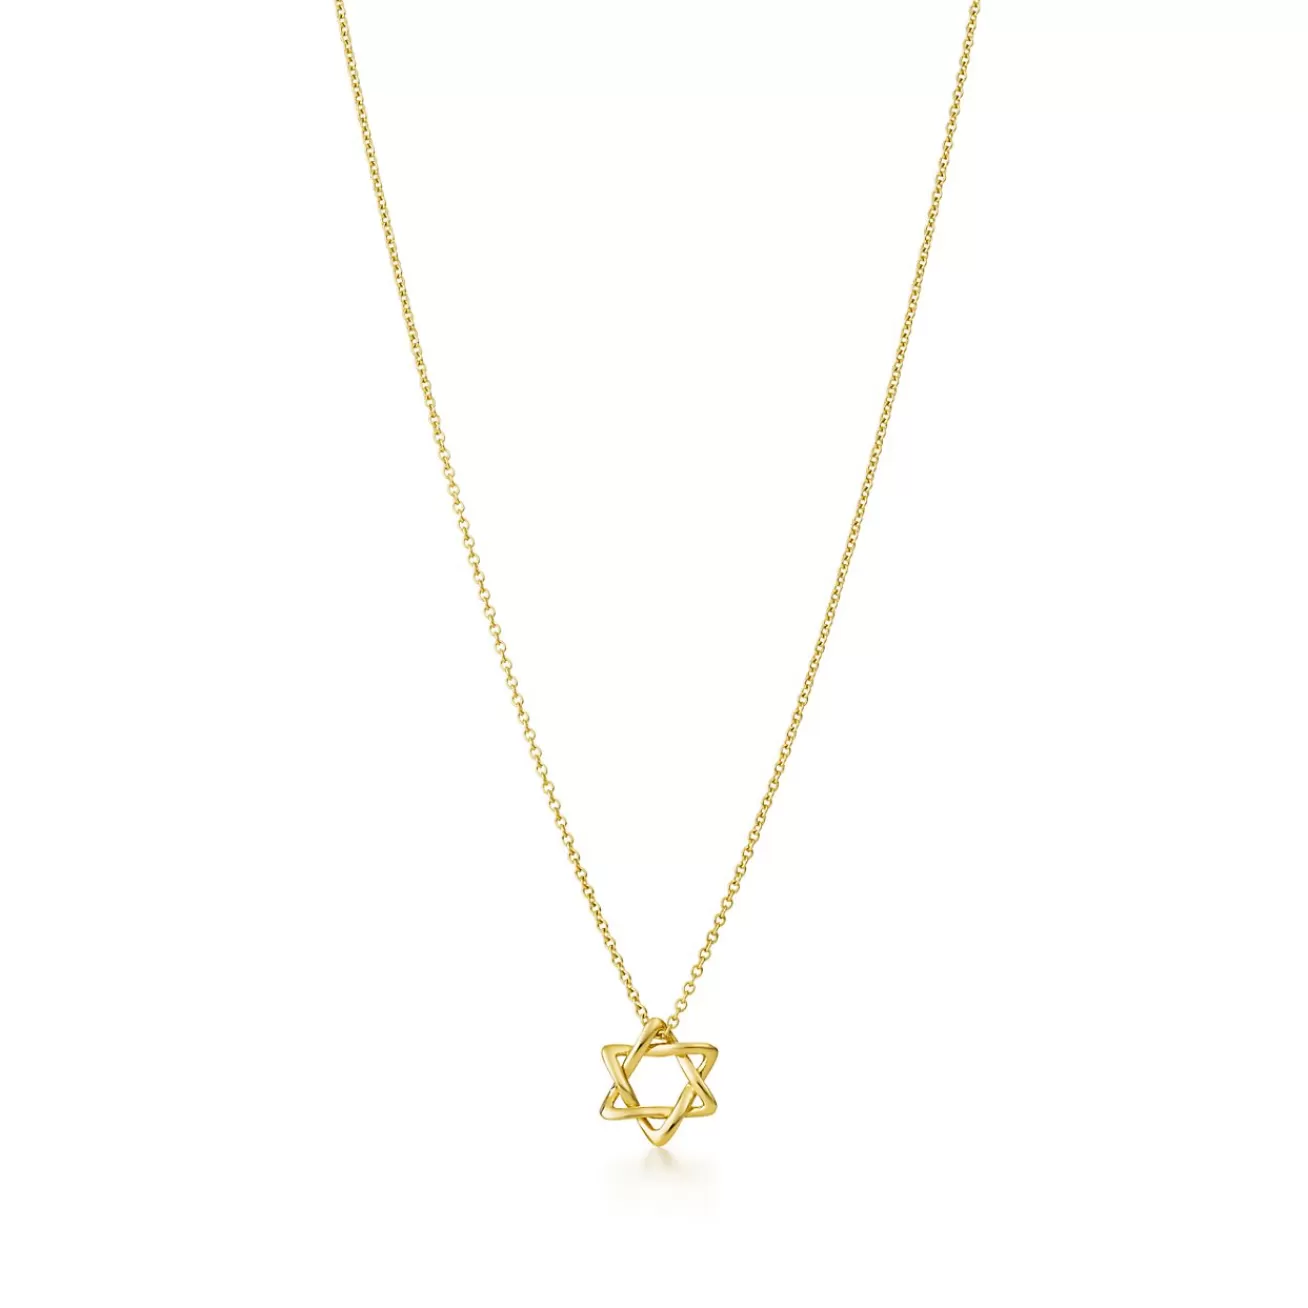 Tiffany & Co. Elsa Peretti® Star of David pendant in 18k gold, 12 mm wide. | ^ Necklaces & Pendants | Gold Jewelry